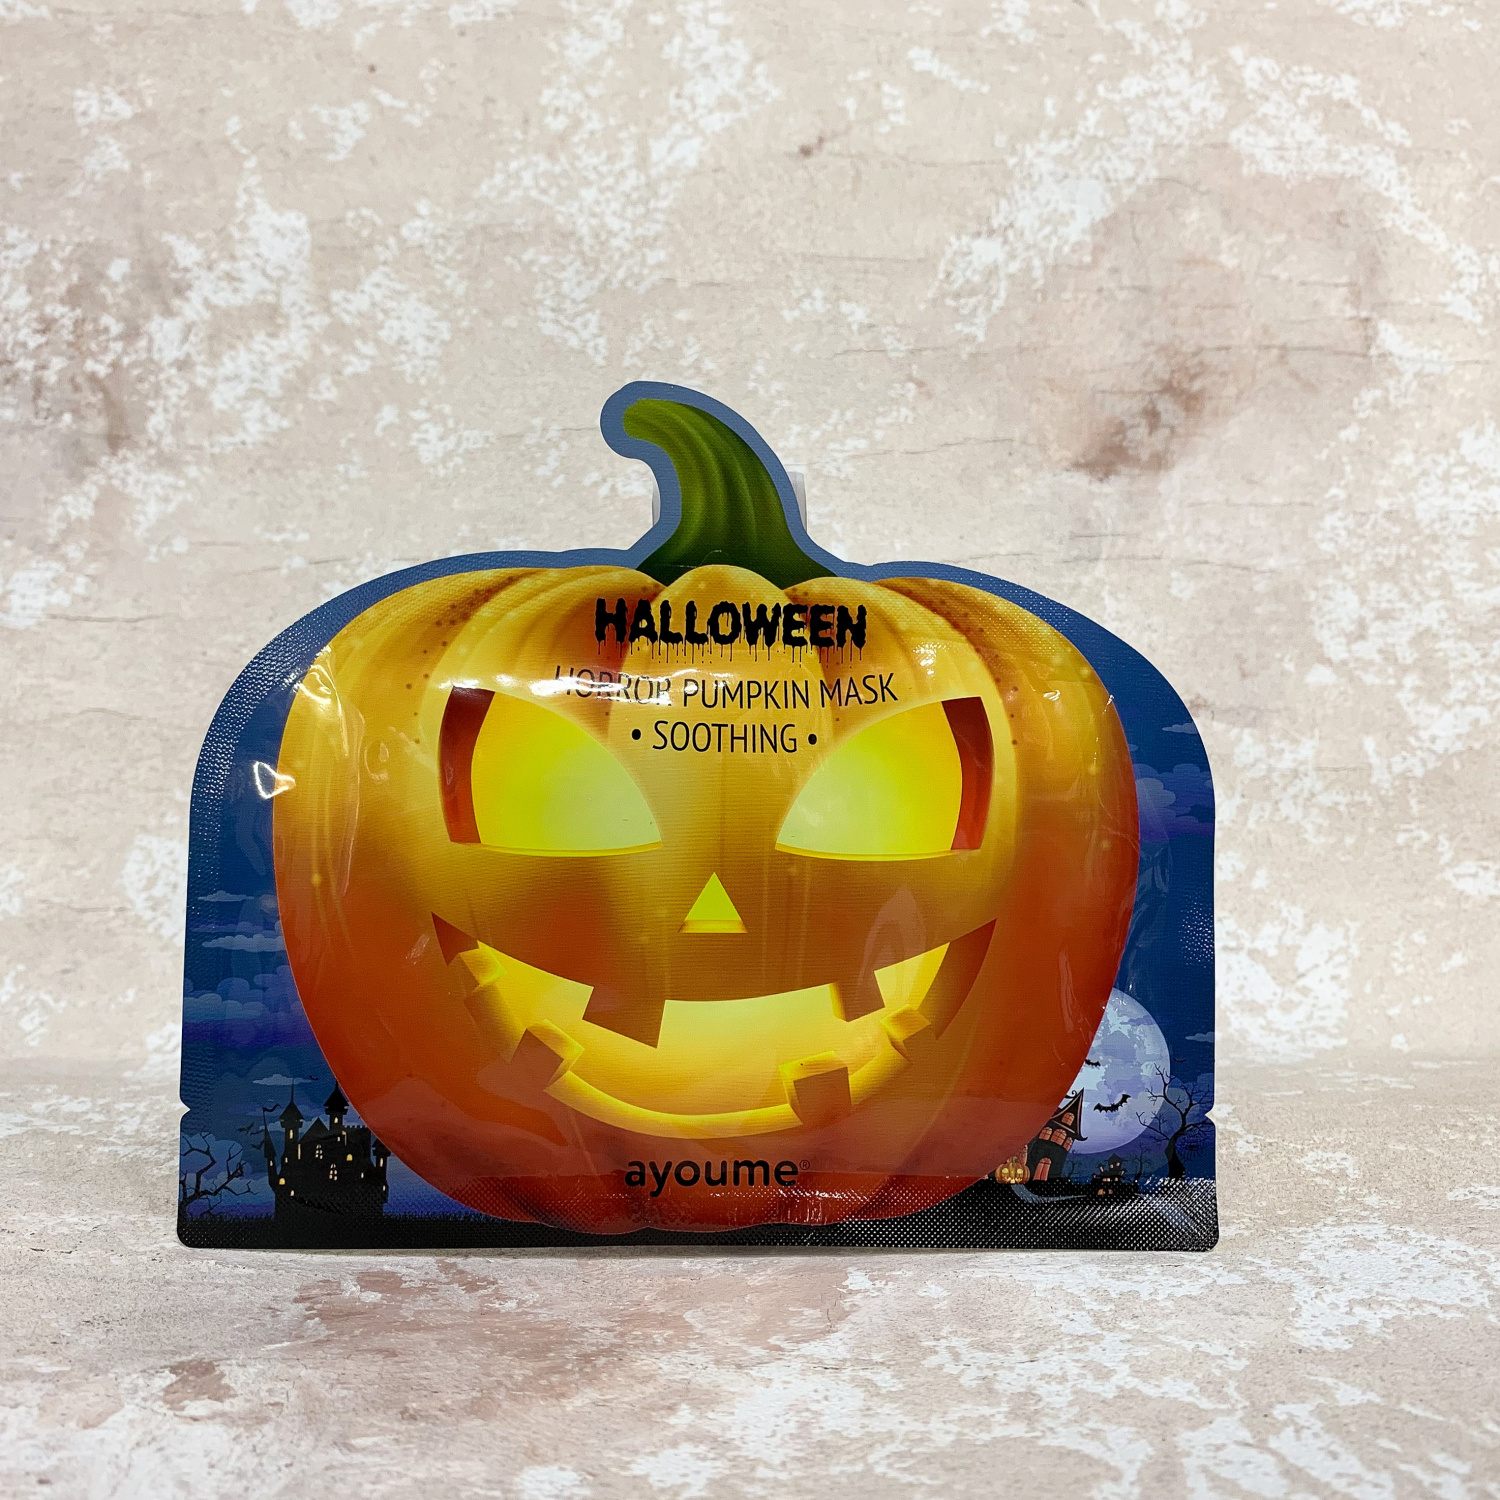 Ayoume Halloween Horror Pumpkin Mask  20 мл